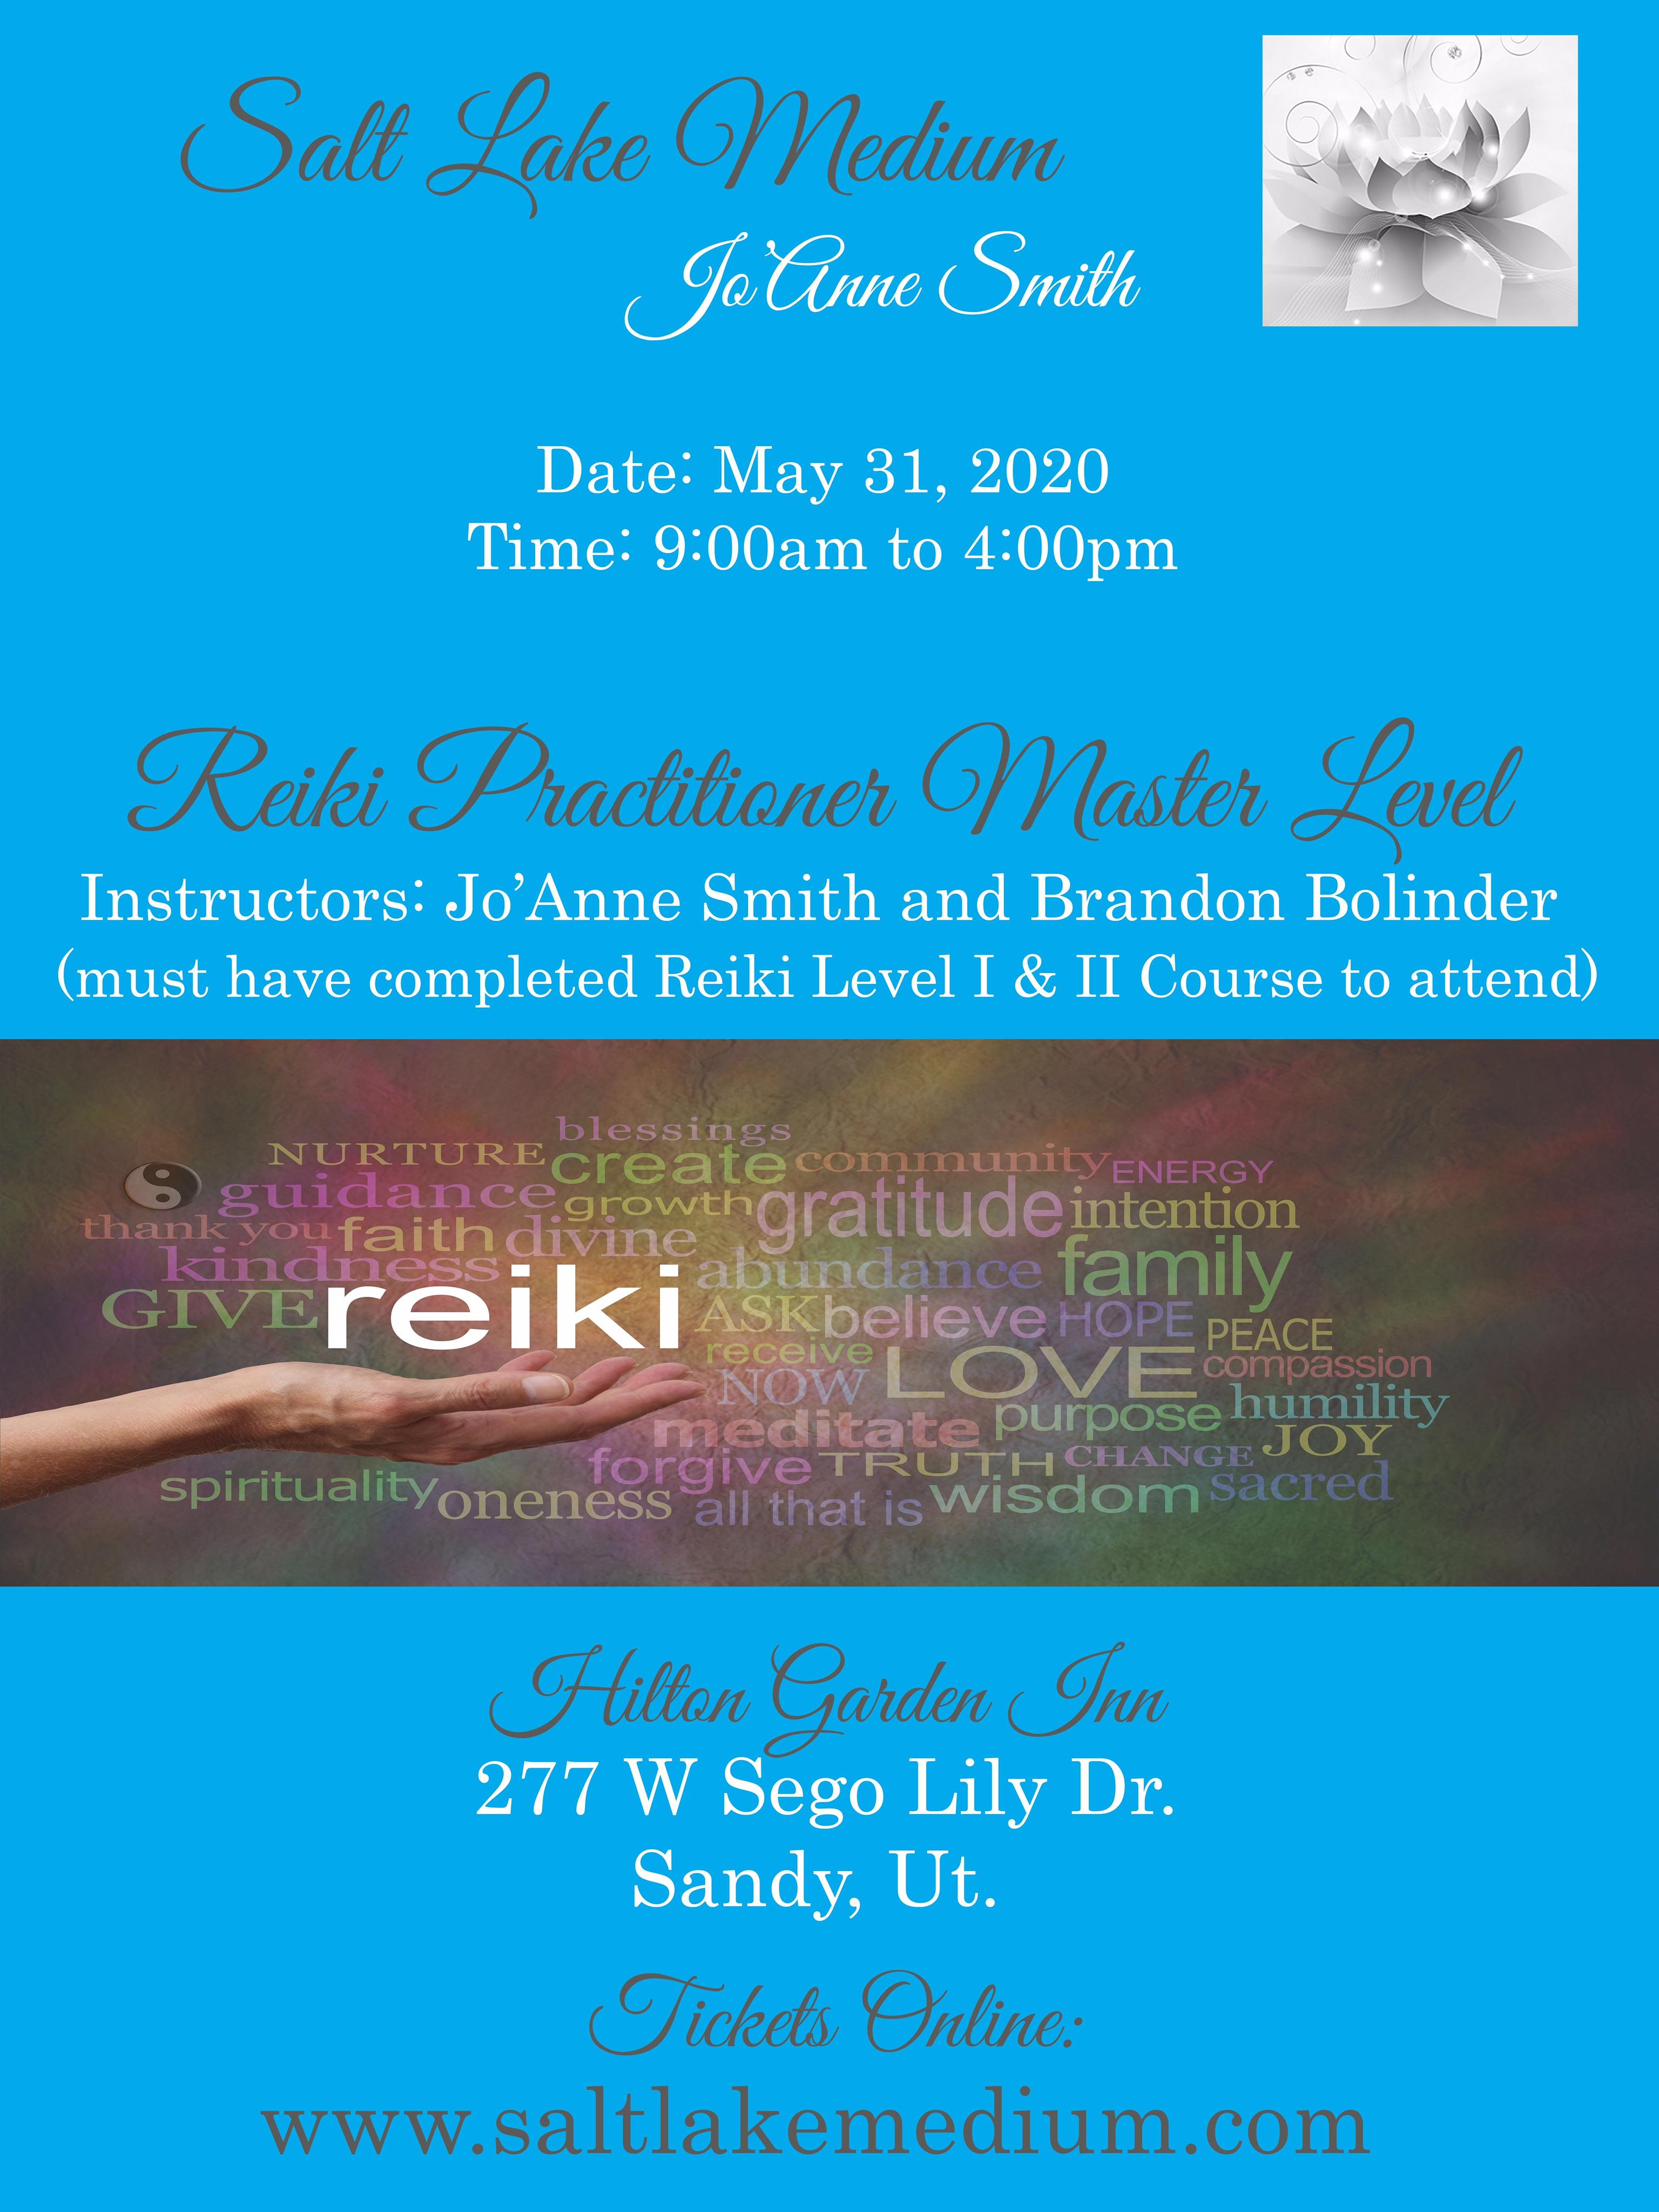 Reiki Practitioner Master Level Certification With Salt Lake